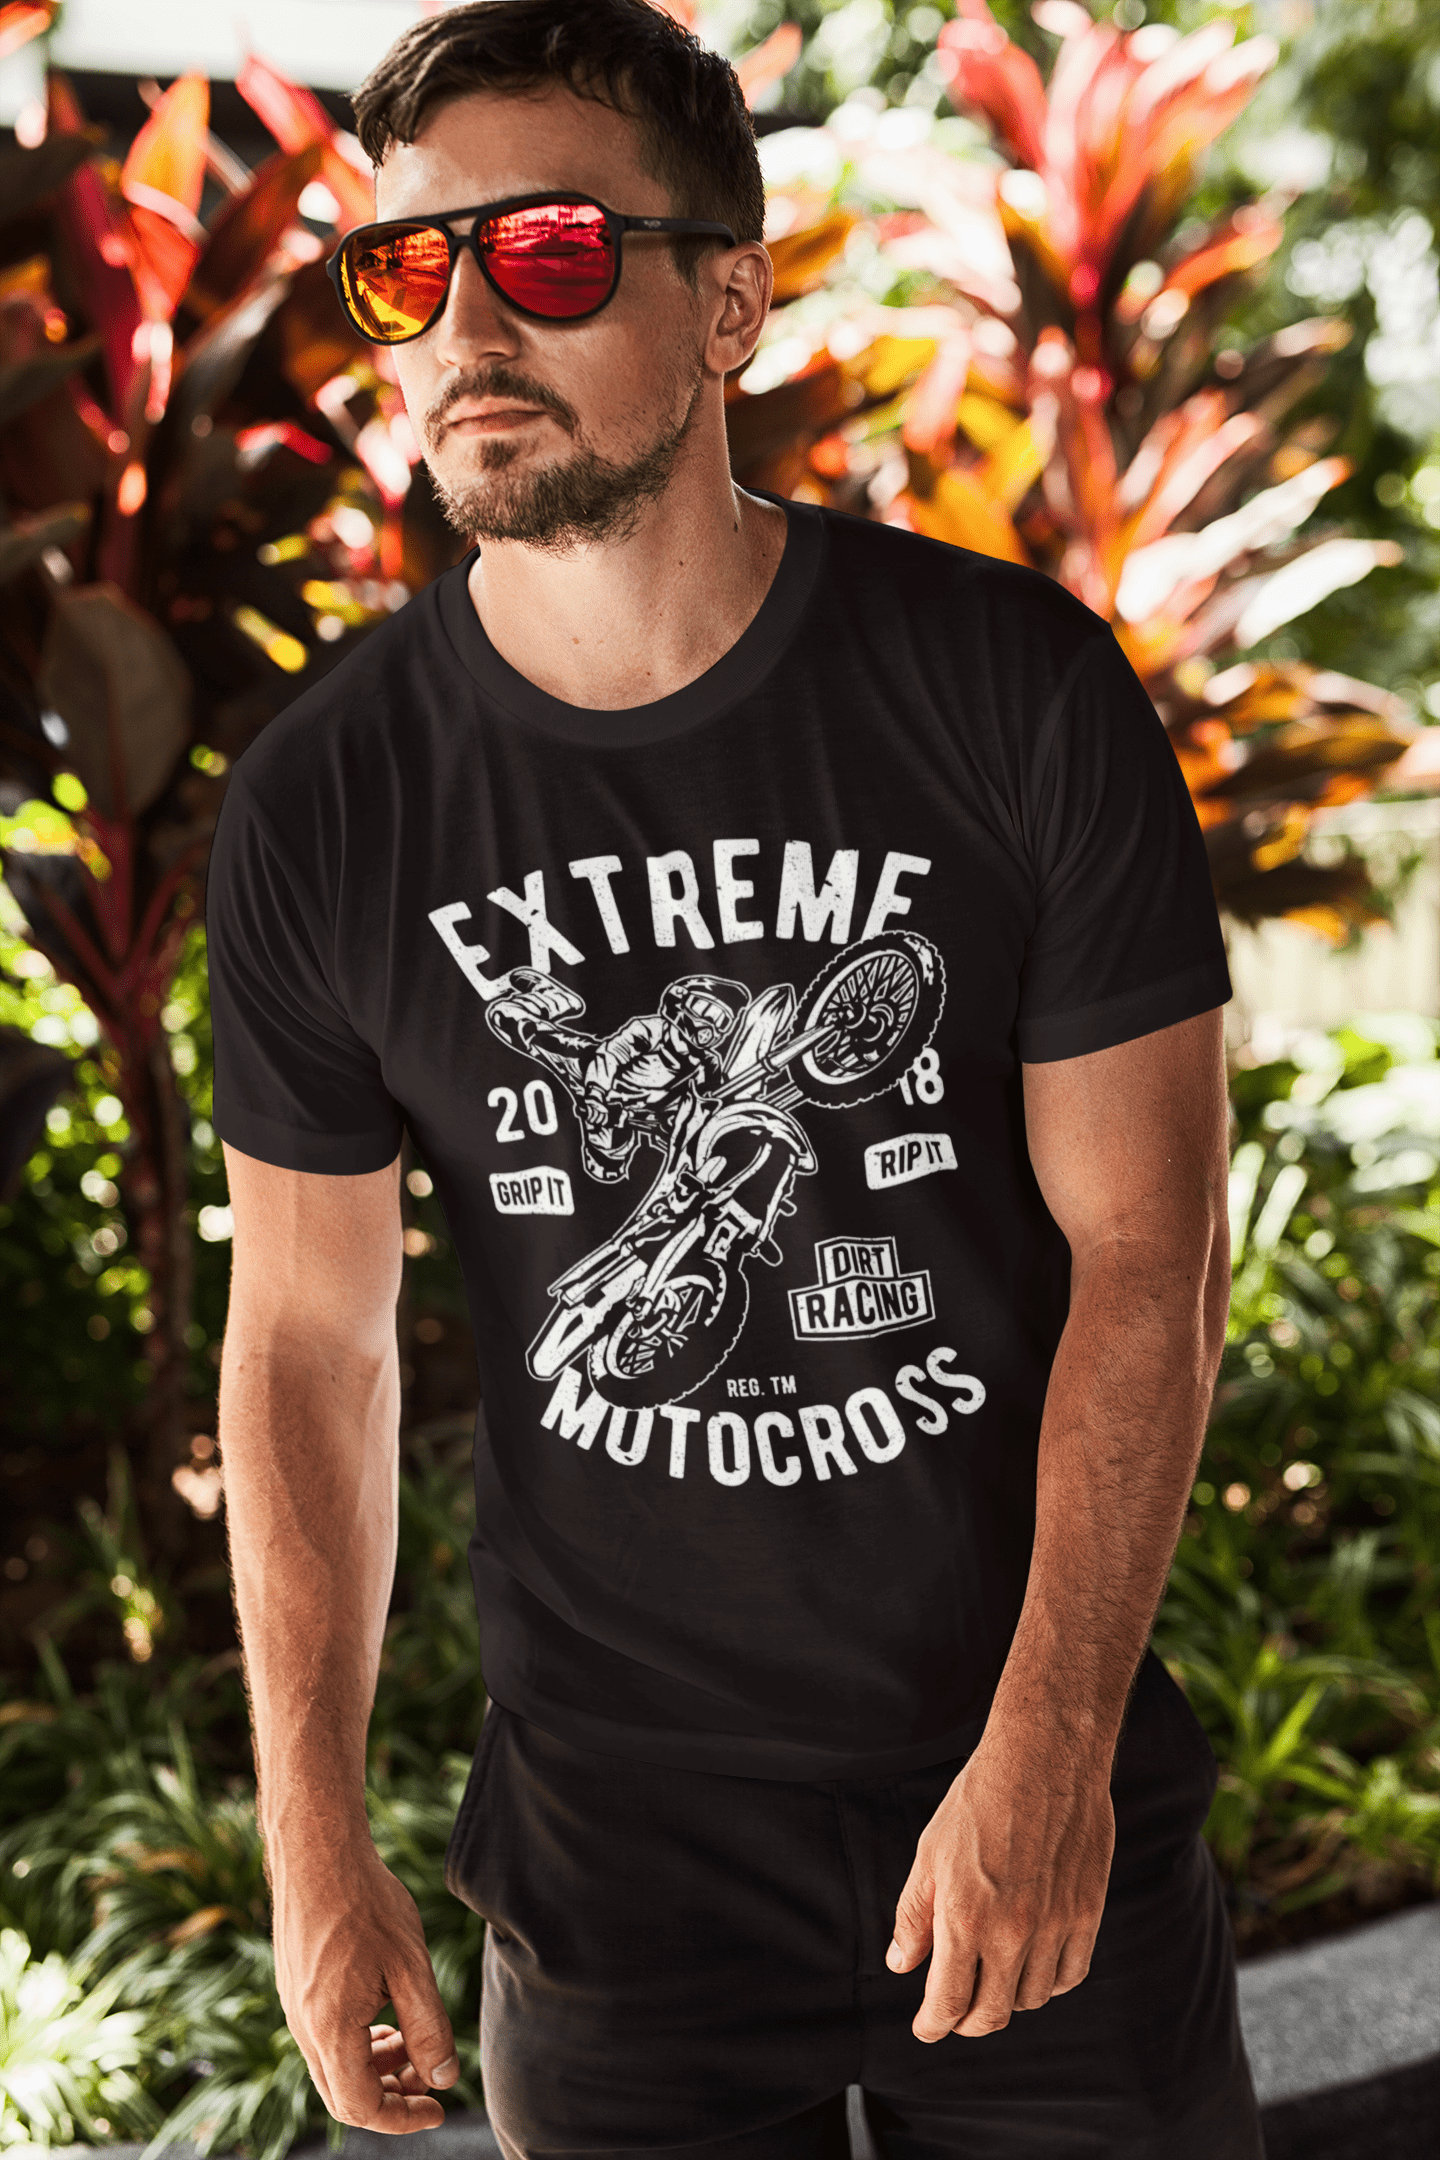 ULTRABASIC Men's Graphic T-Shirt Extreme Motorcross 2018 - Dirt Racing - Motor Lovers